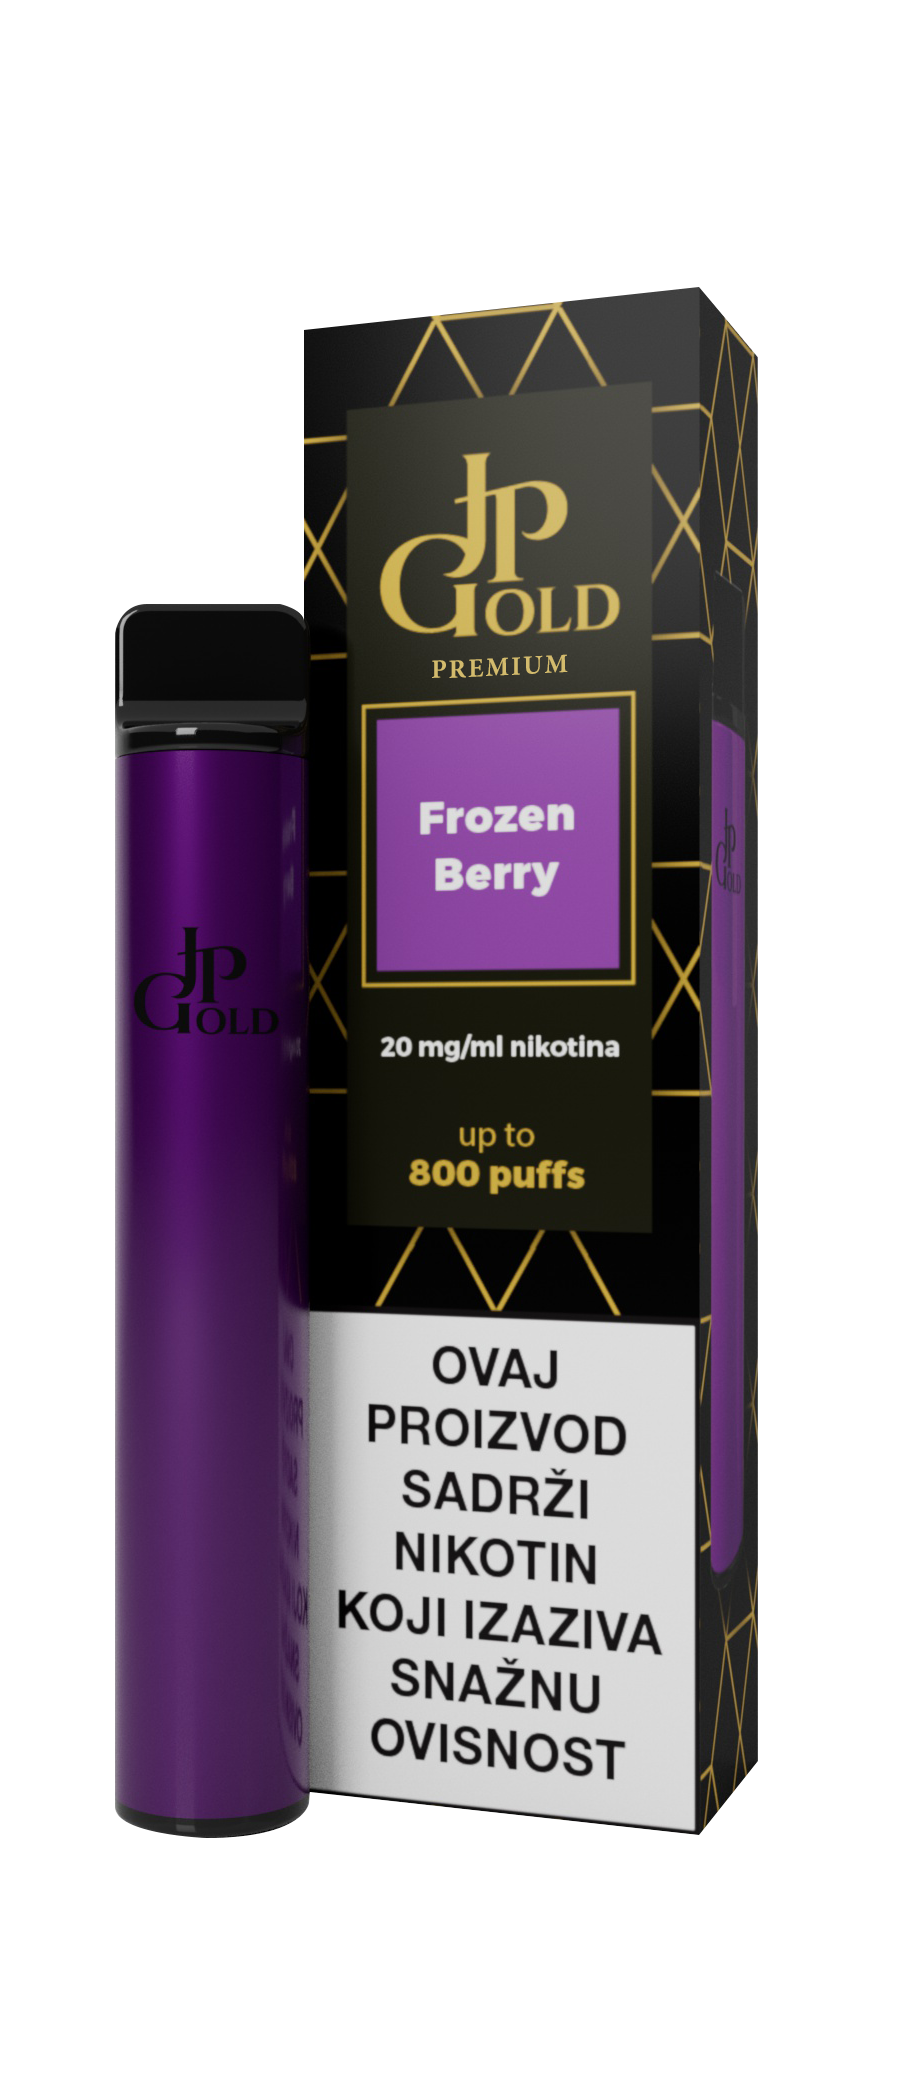 JP GOLD Premium, Frozen Berry, 20mg nicotine